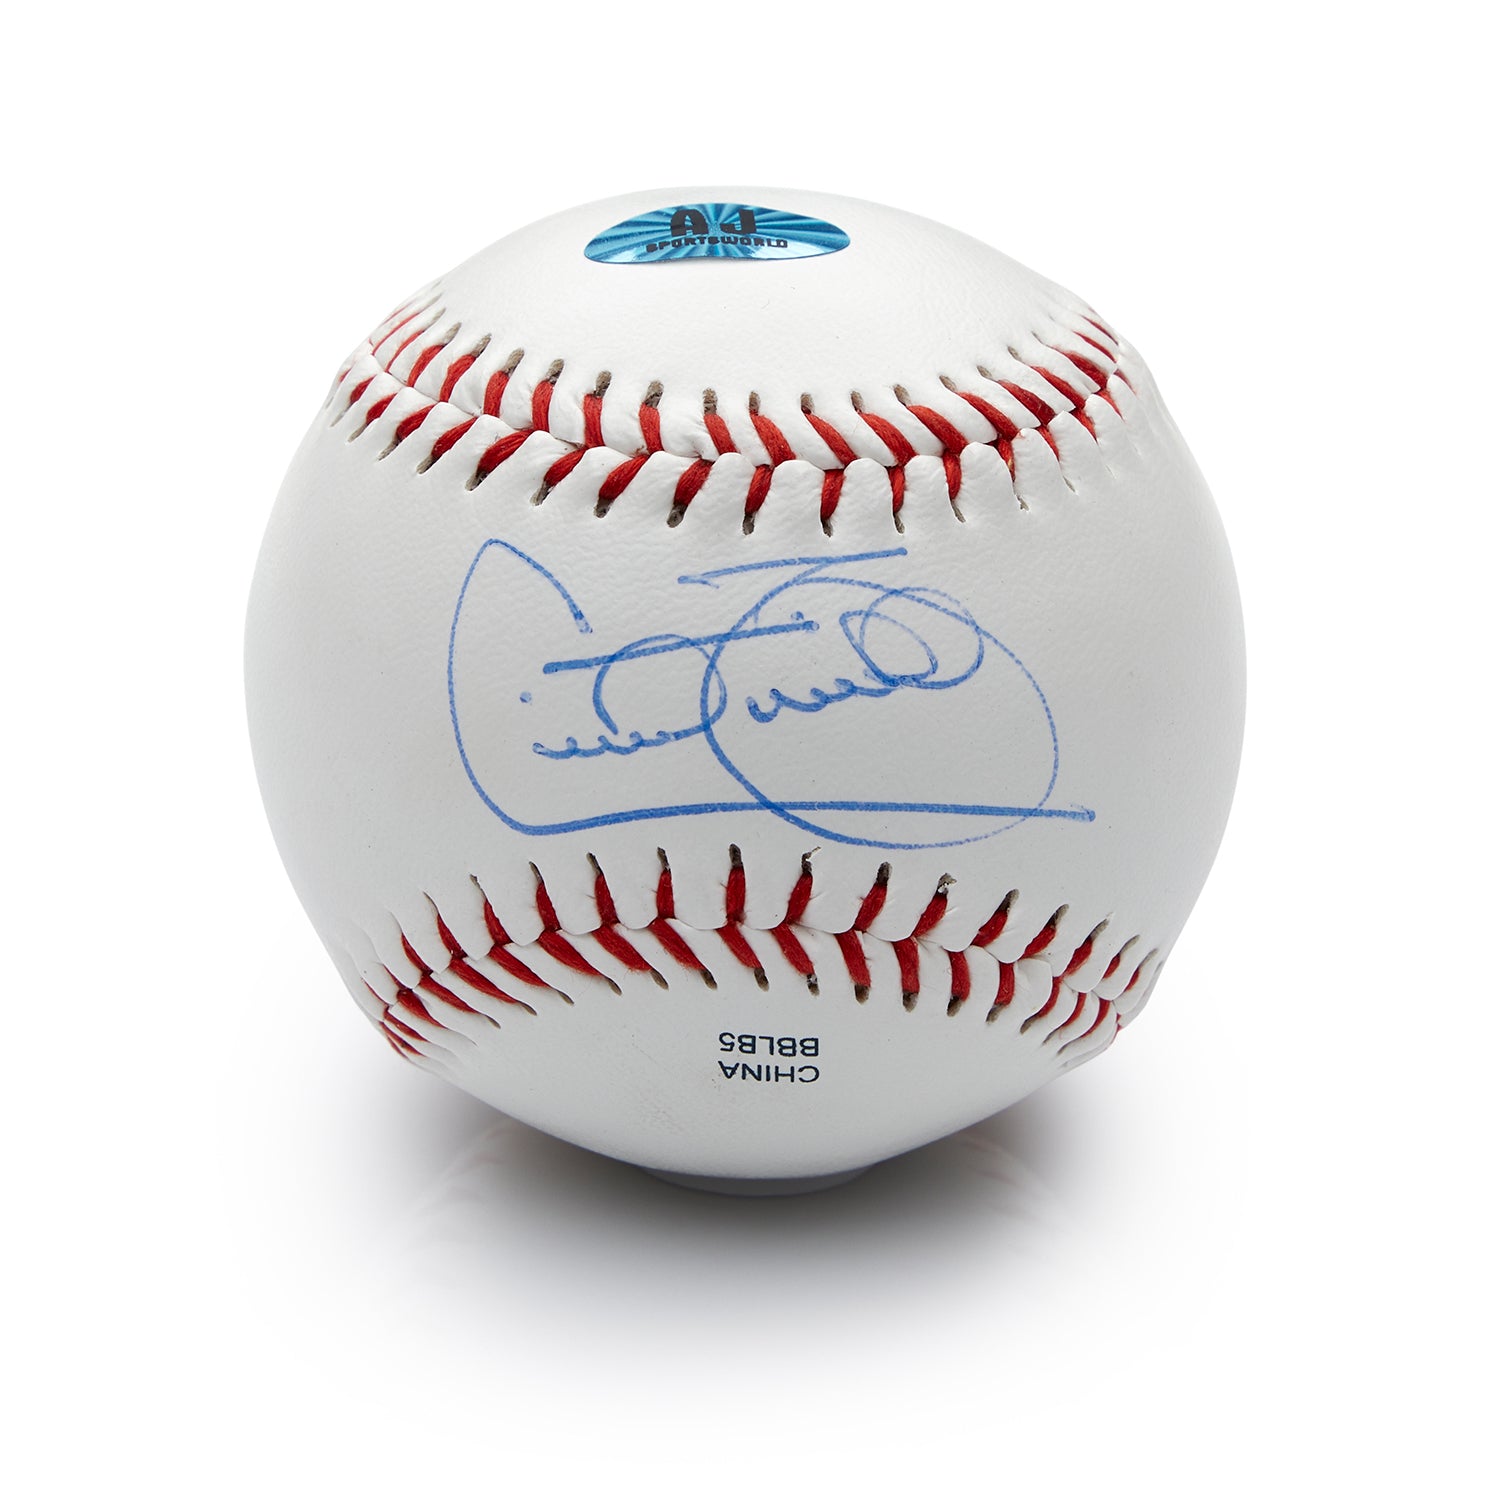 Cecil Fielder Autographed Rawlings League Baseball